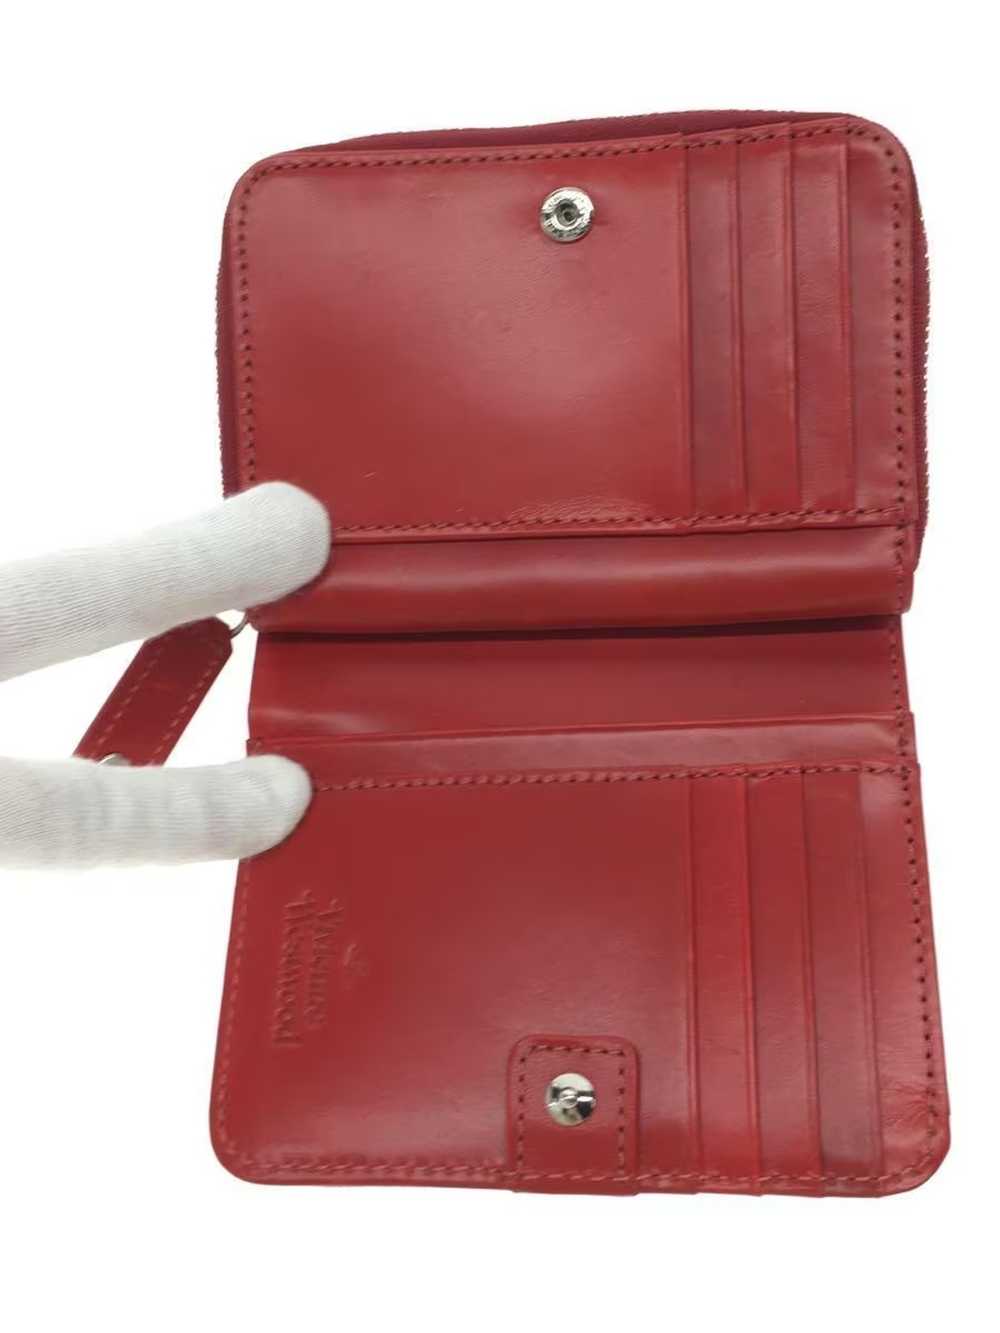 Vivienne Westwood Multi Orb Leather Wallet - image 3